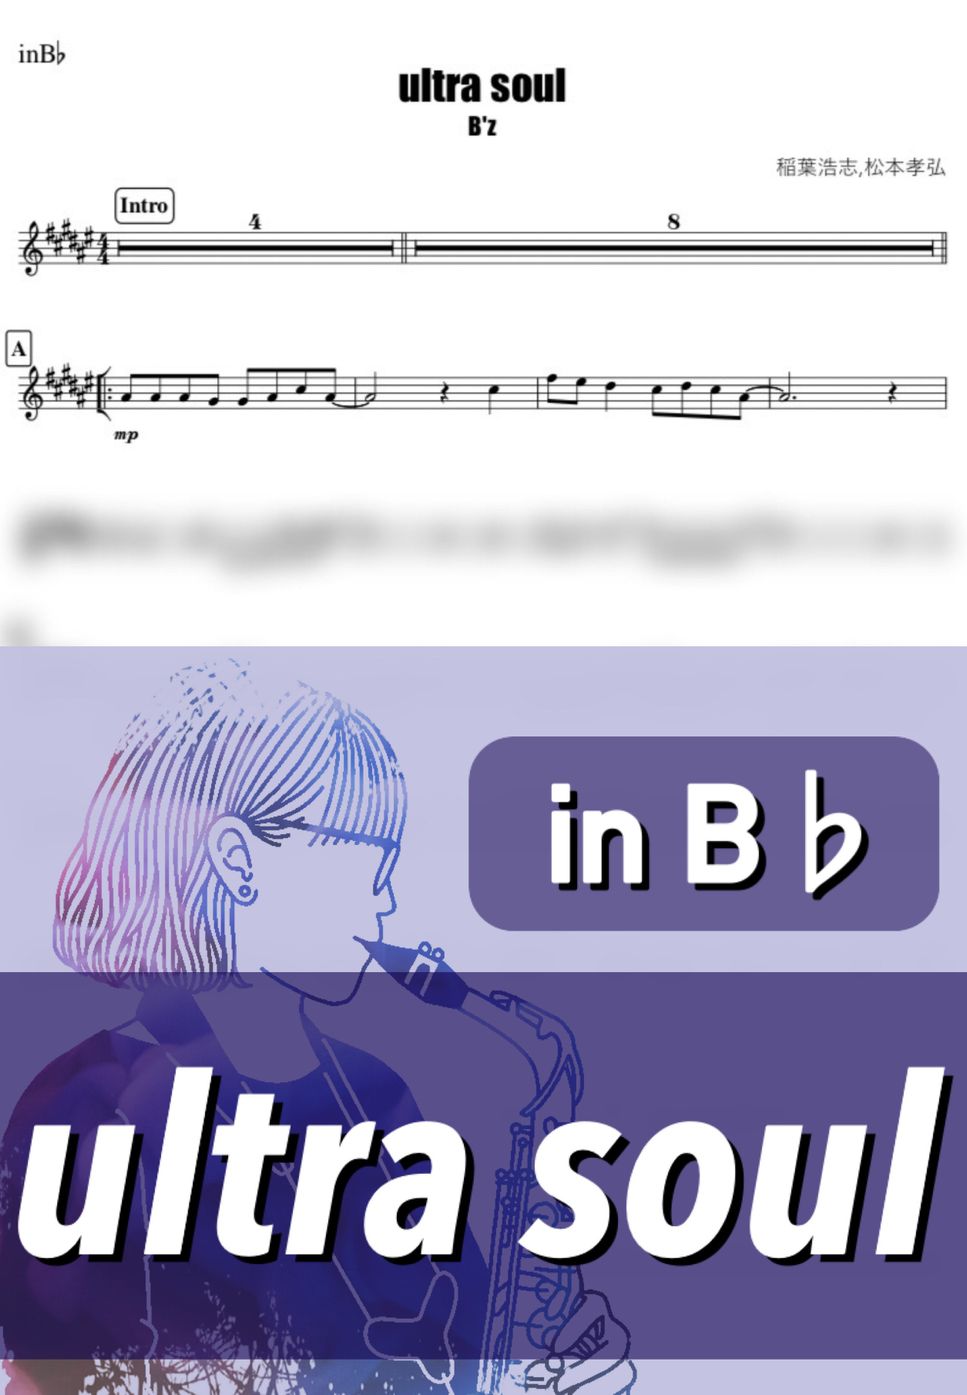 B'z - ultra soul (B♭) by kanamusic